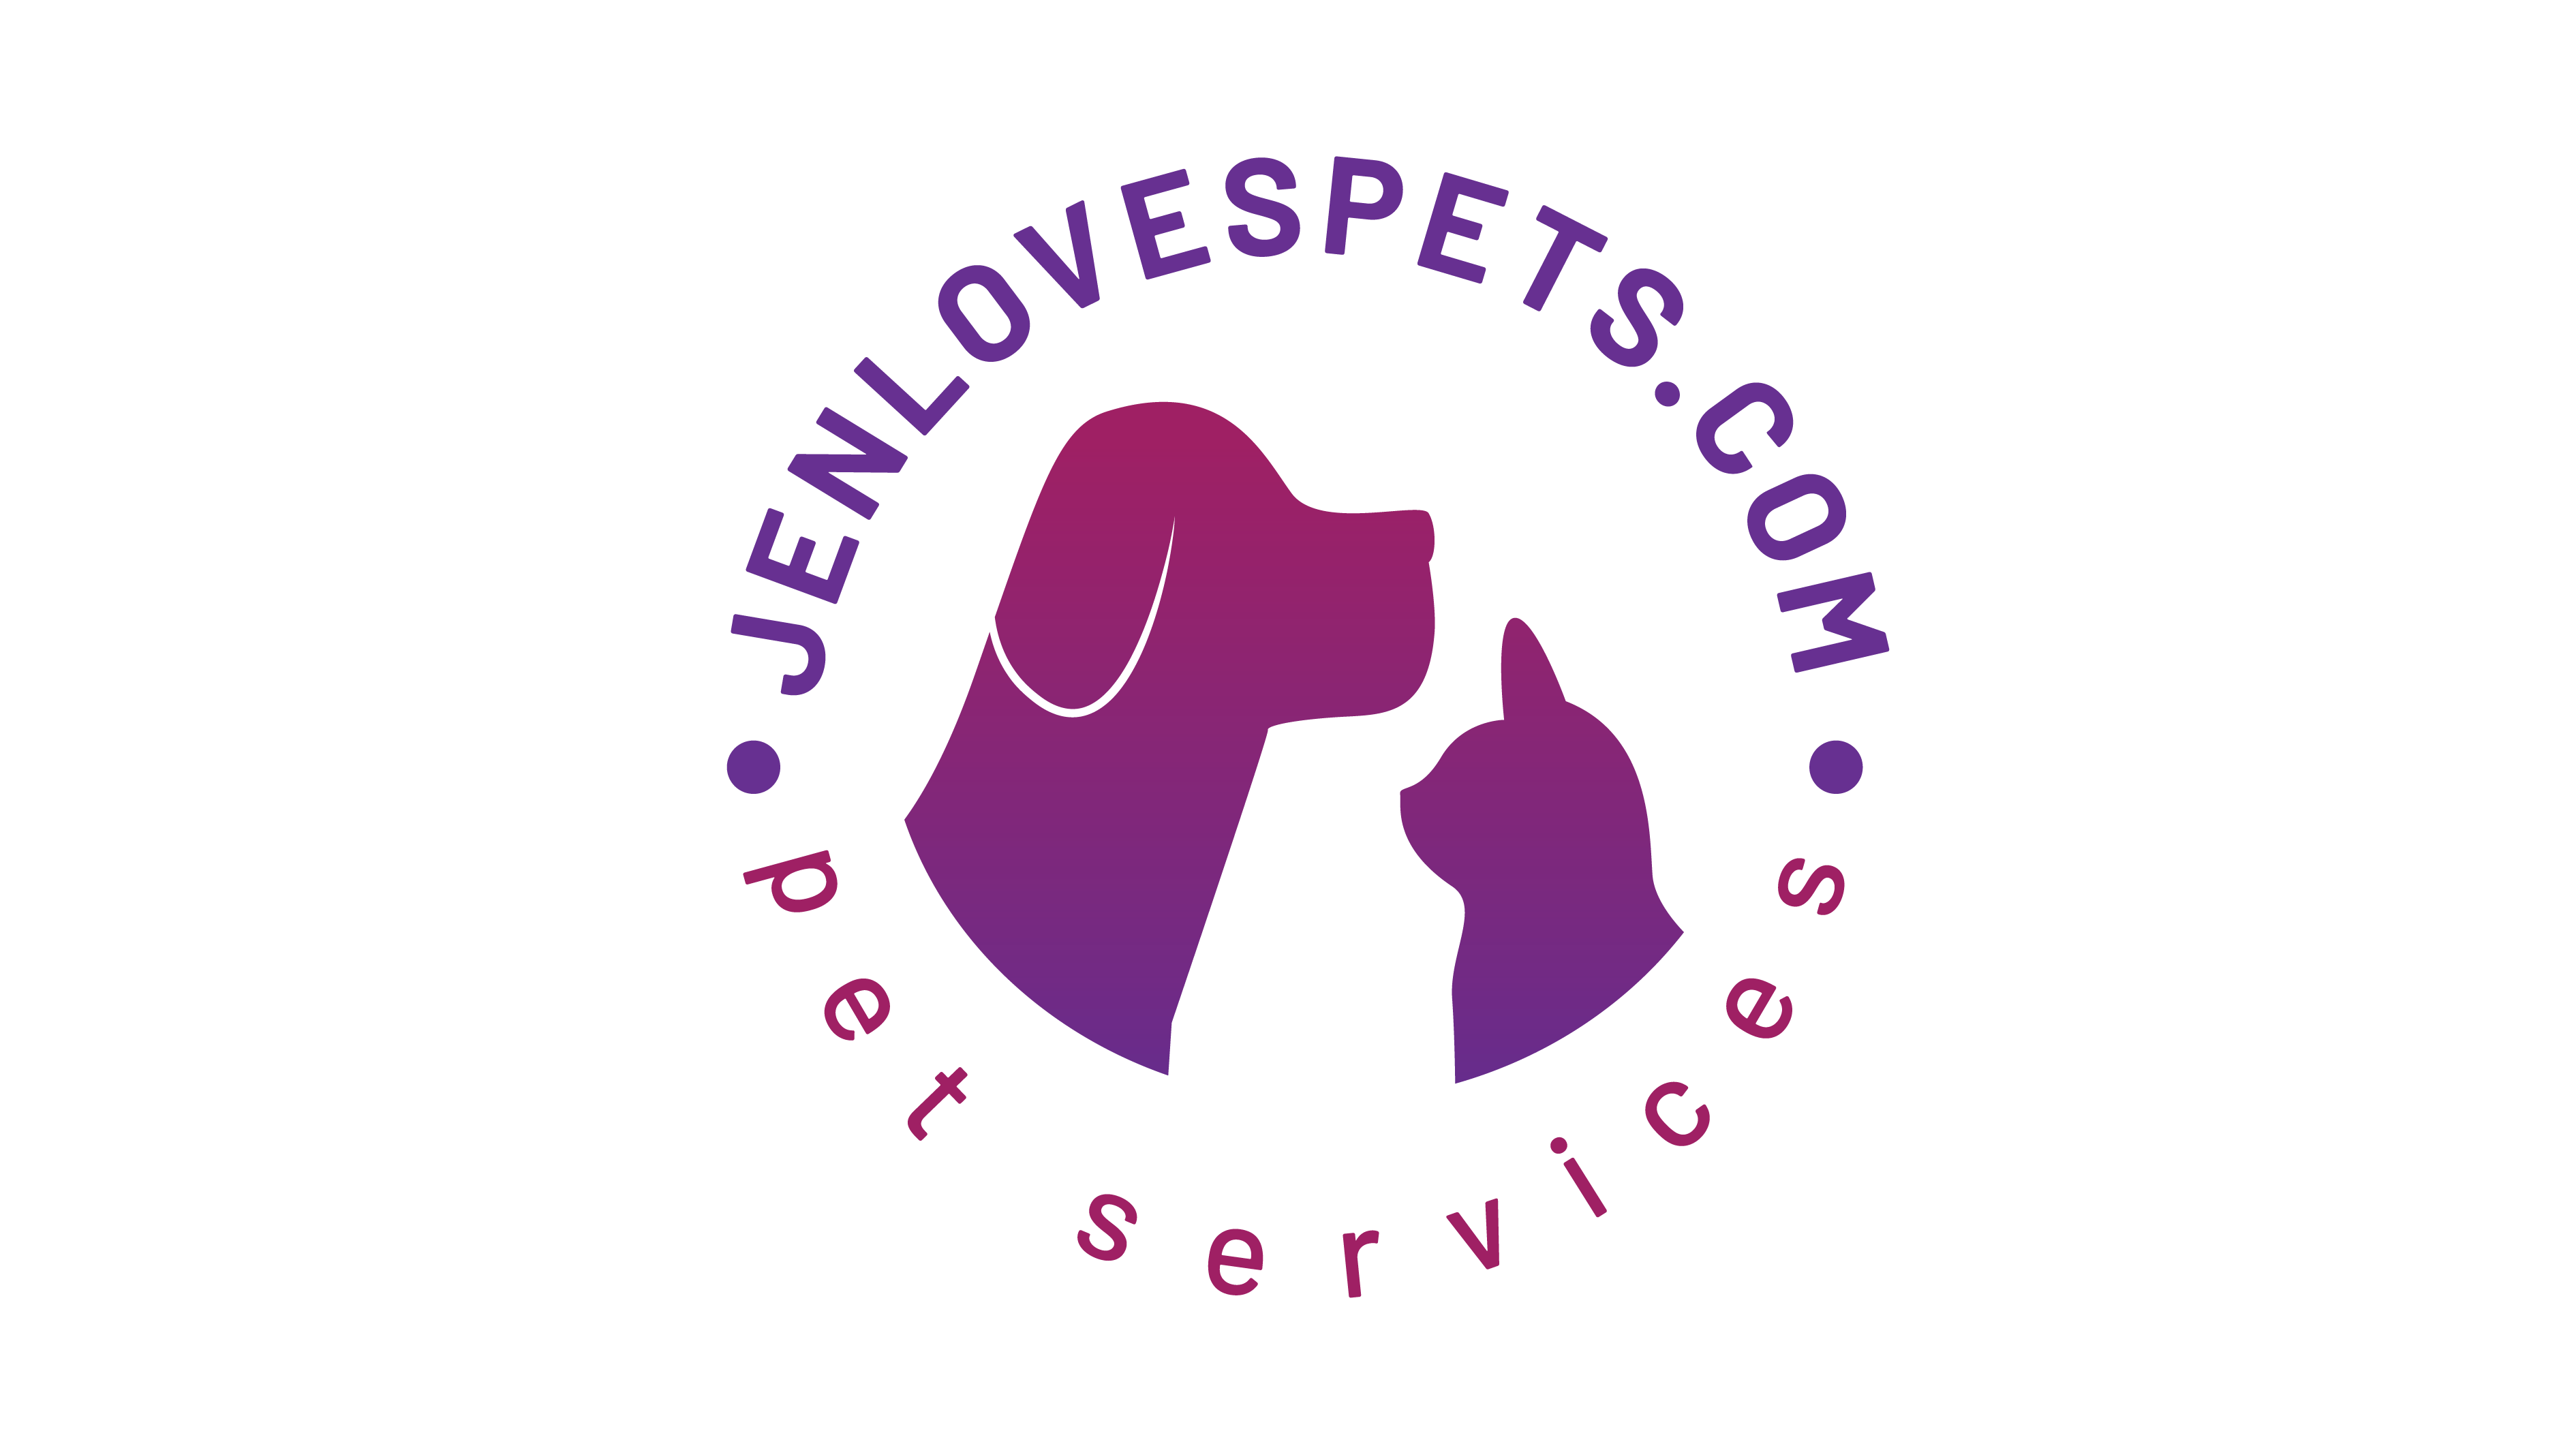 jen-loves-pets-logo-summary-image.png